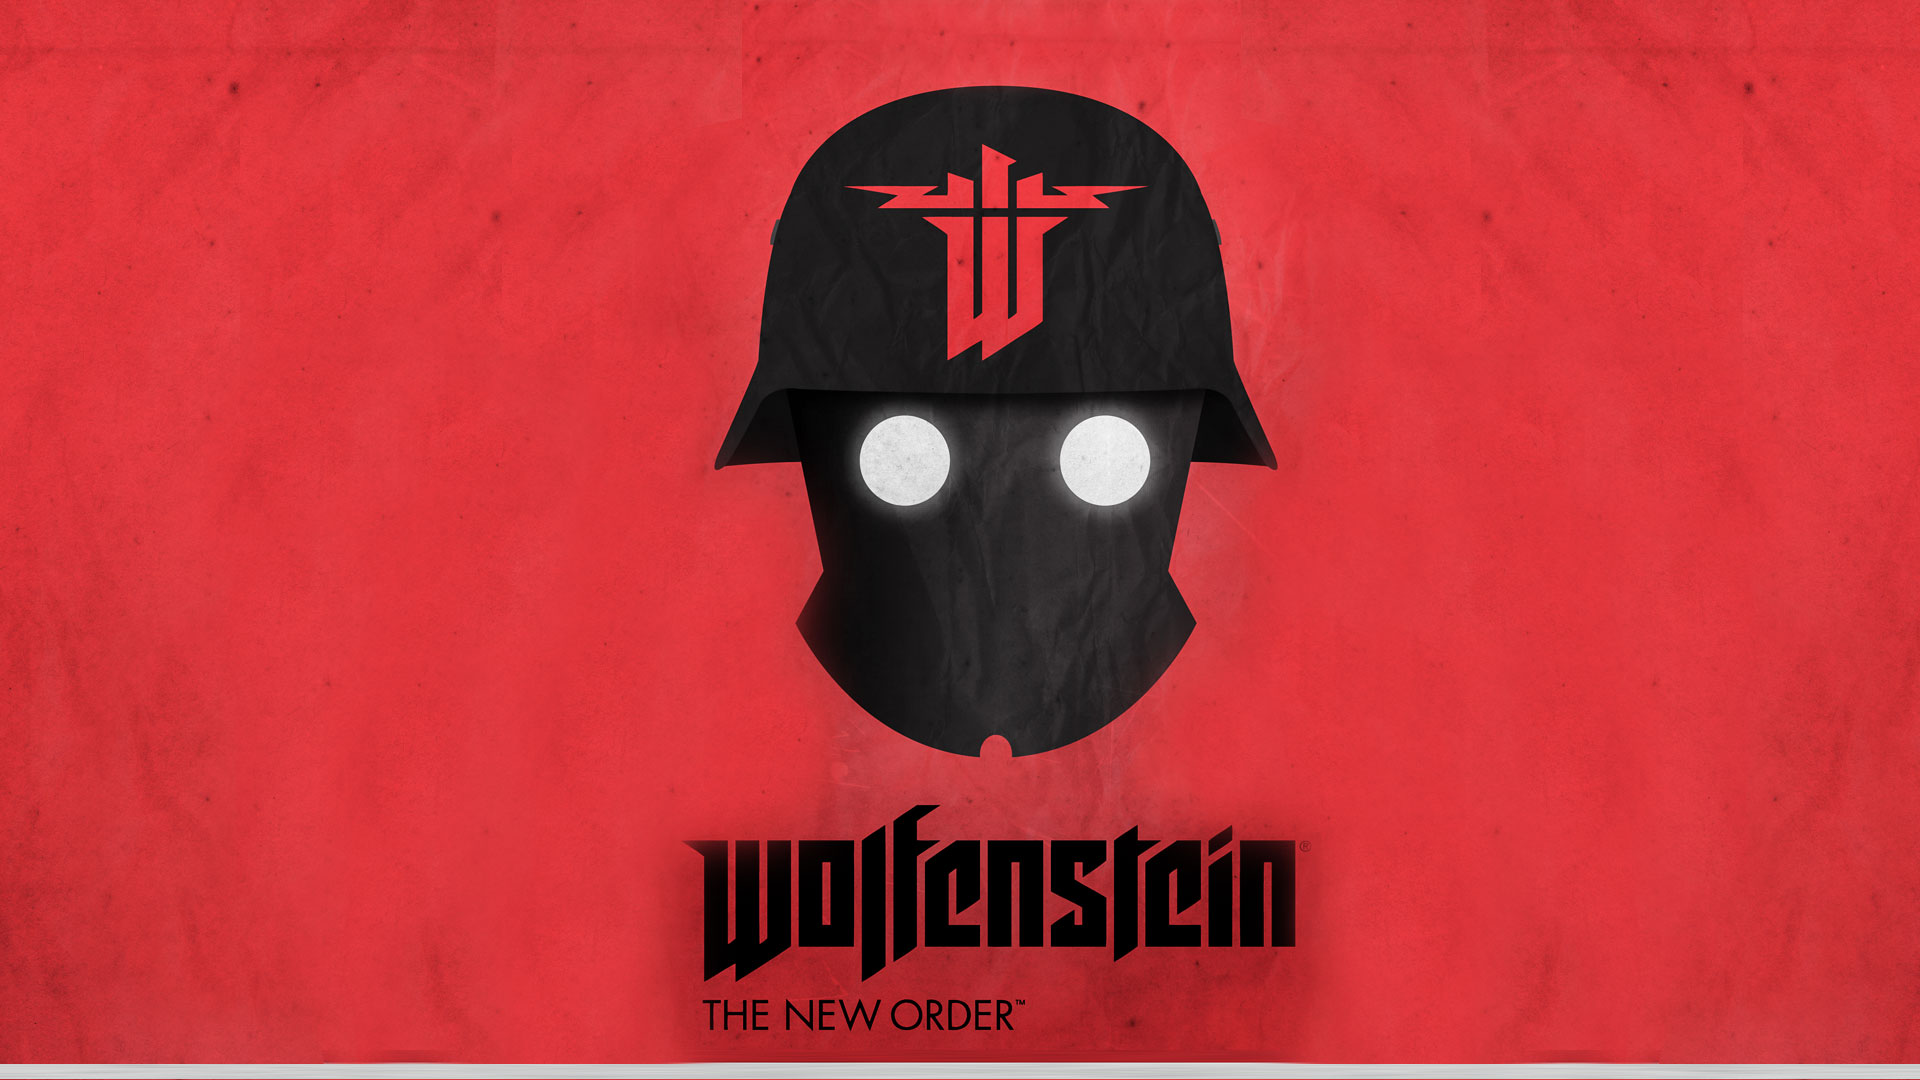 48+] Wolfenstein The New Order Wallpaper on WallpaperSafari